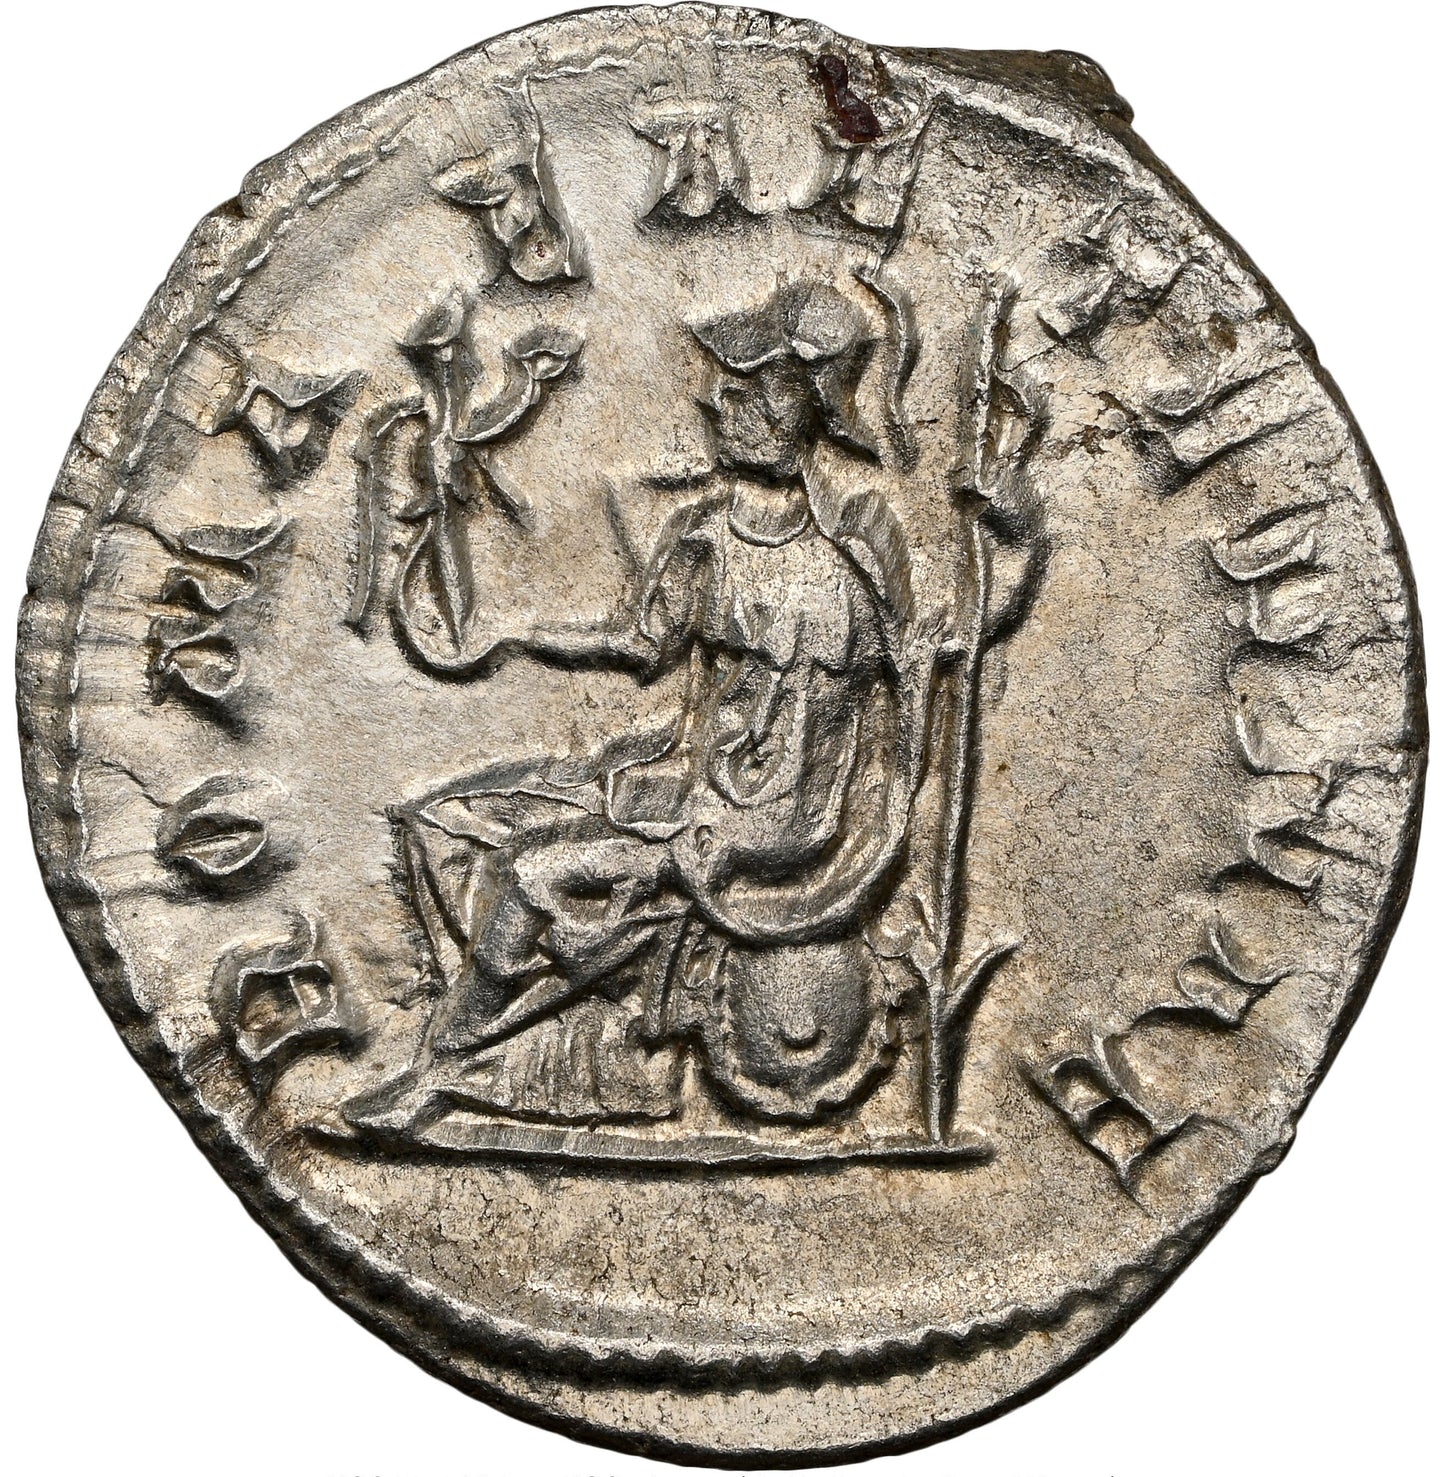 Roman Empire - Philip I - Silver Double-Denarius - NGC Ch AU - RIC:44b